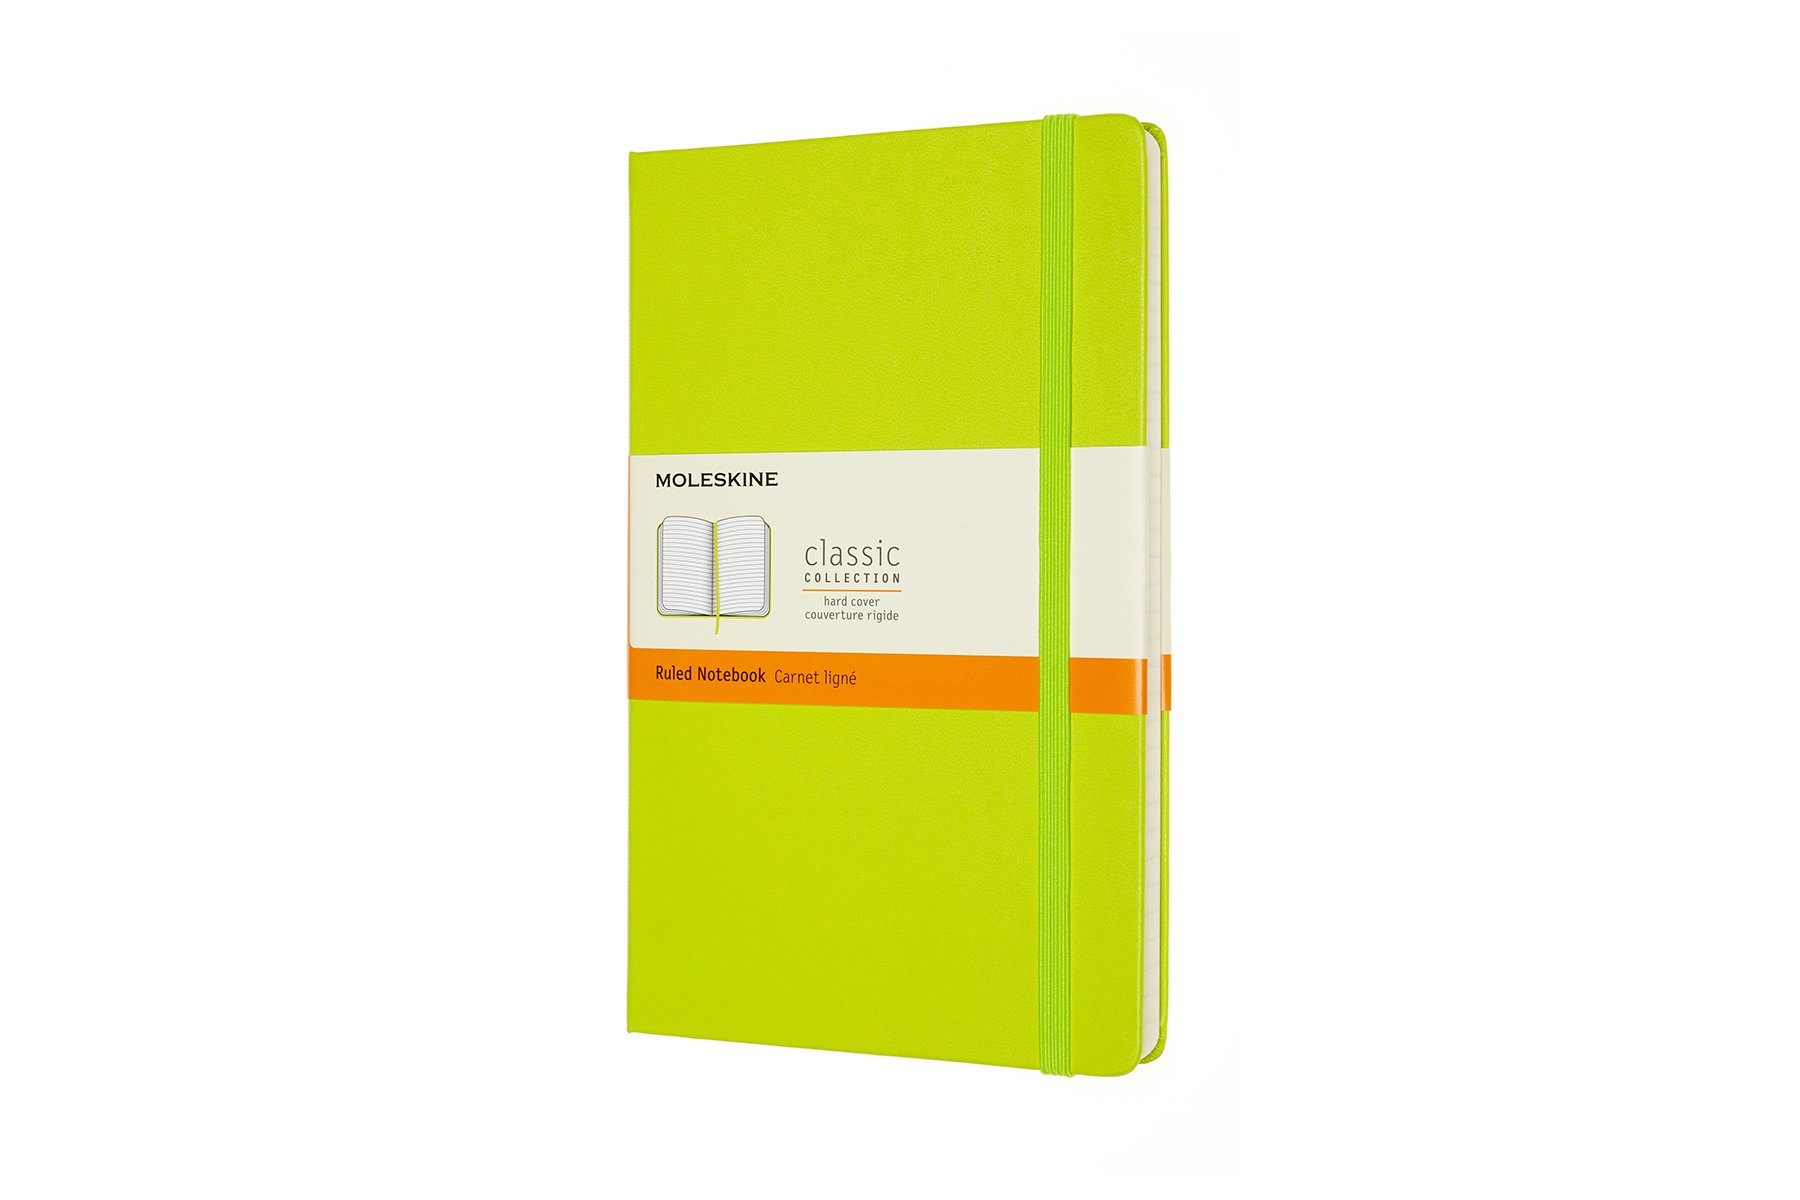 (13x21) mit Classic Collection L/A5 MOLESKINE Limetten - 70g-Papier Notizbuch, Groß - festem Grün Einband